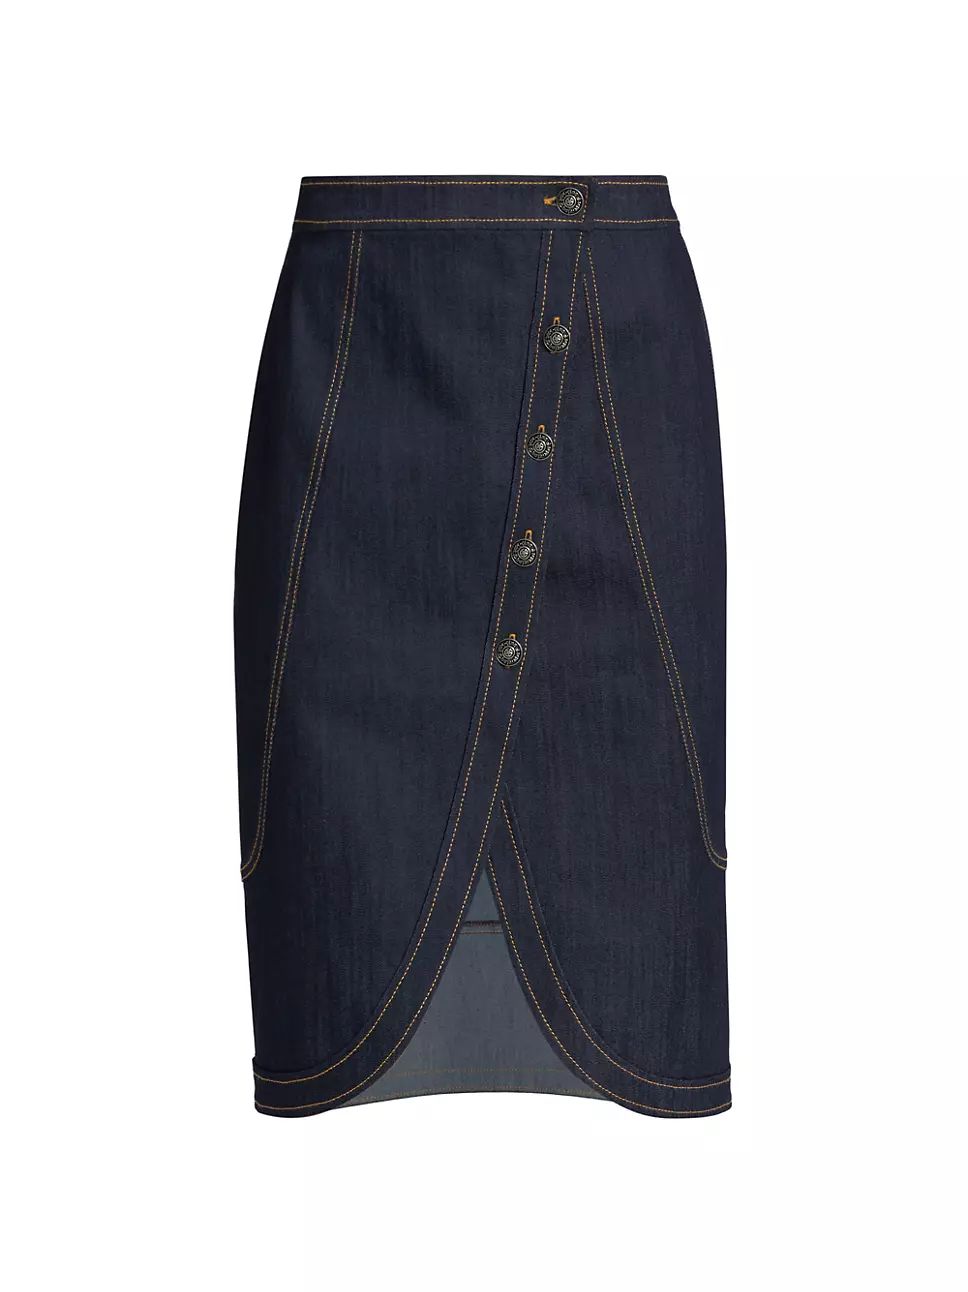 Acacia Denim Knee-Length Skirt | Saks Fifth Avenue